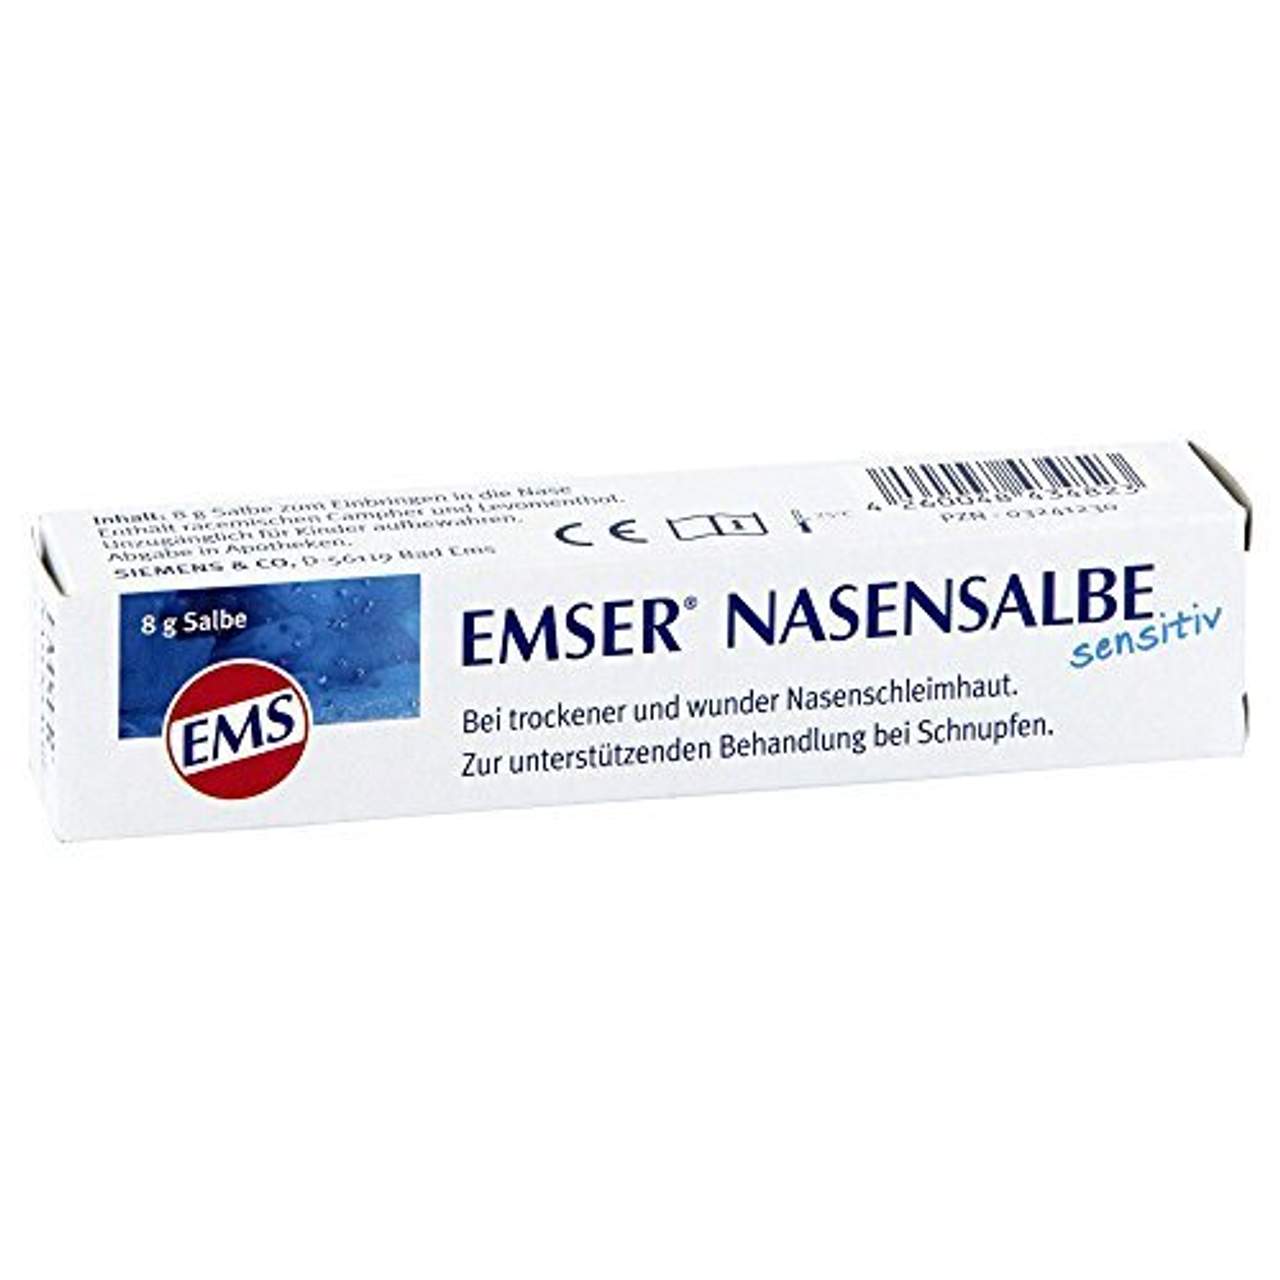 Emser Nasensalbe Sensitiv 8 g Nasensalbe by Unbekannt